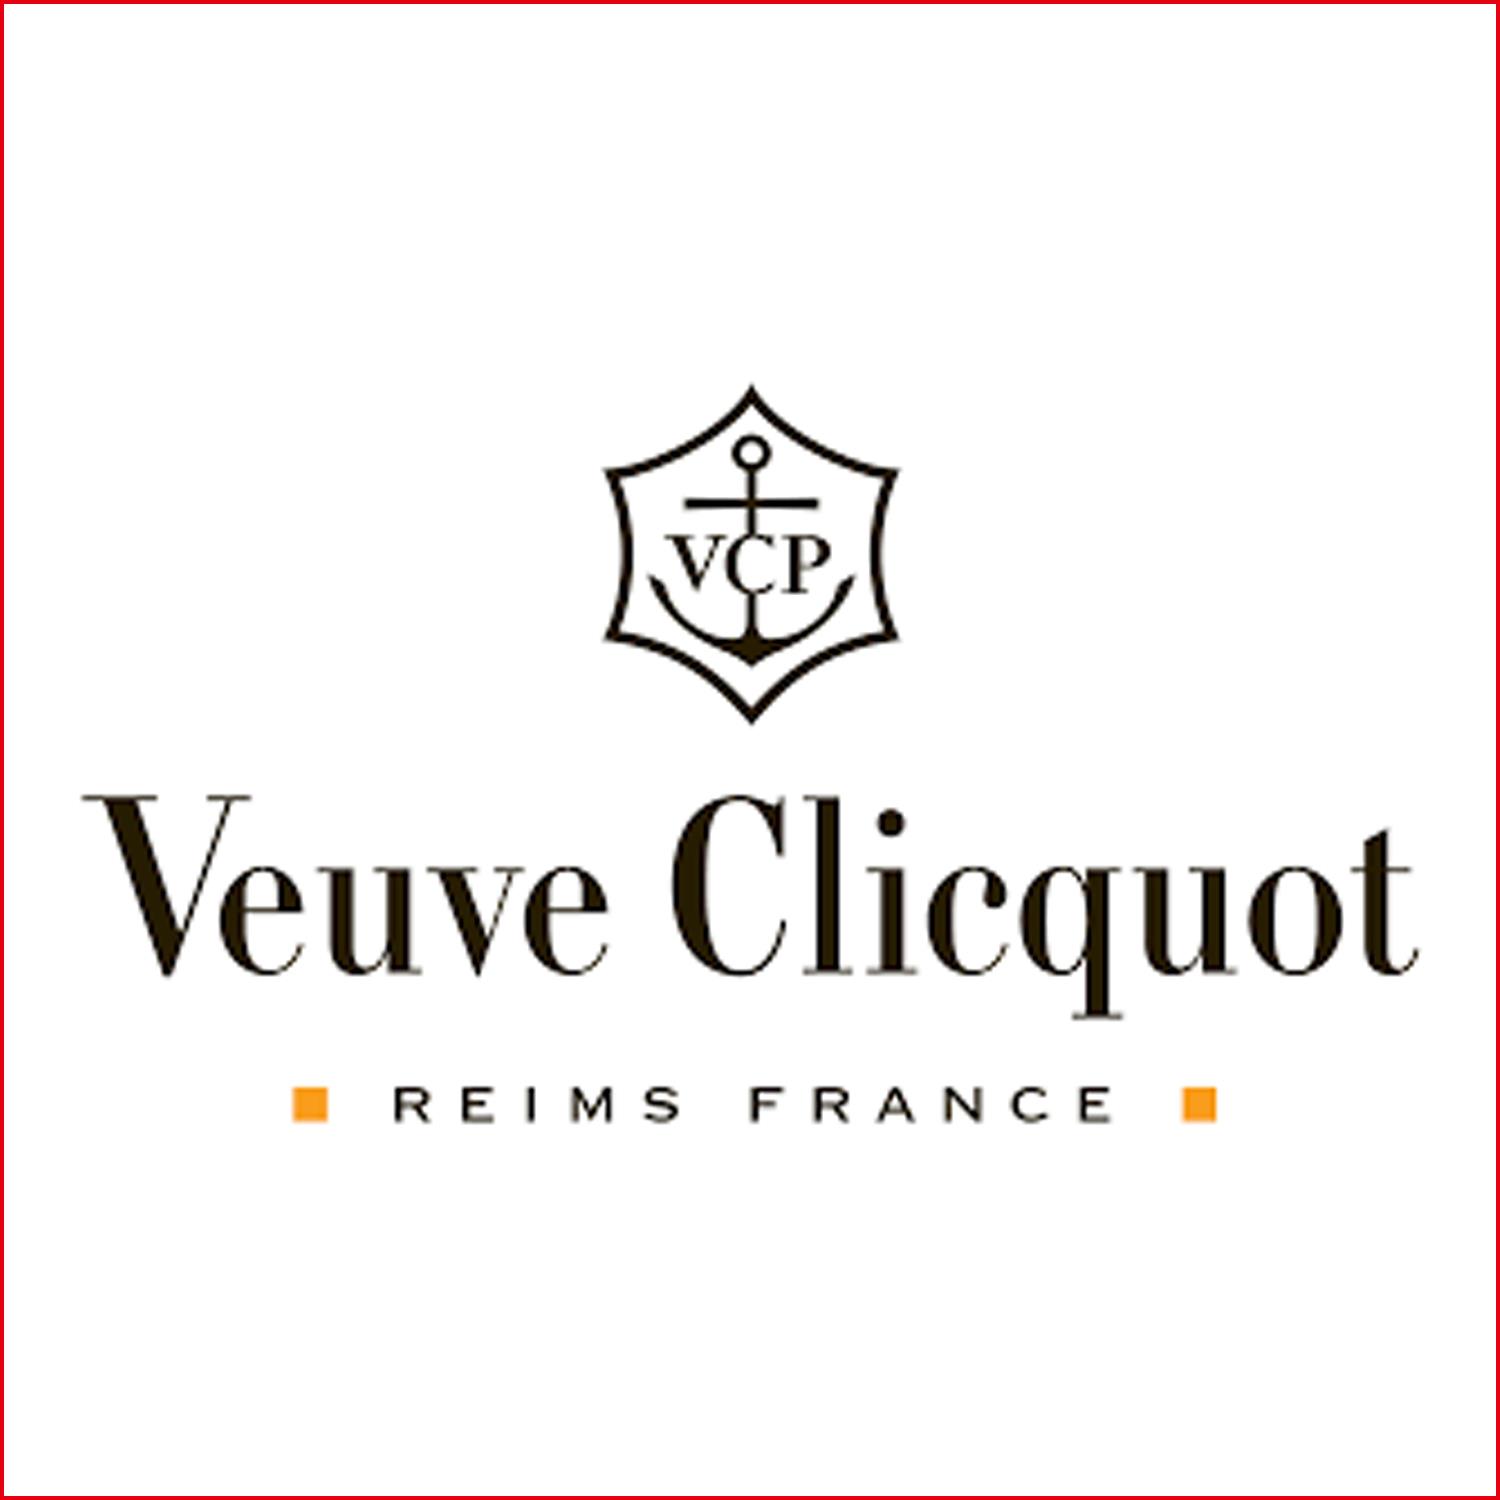 凱歌 Veuve Clicquot